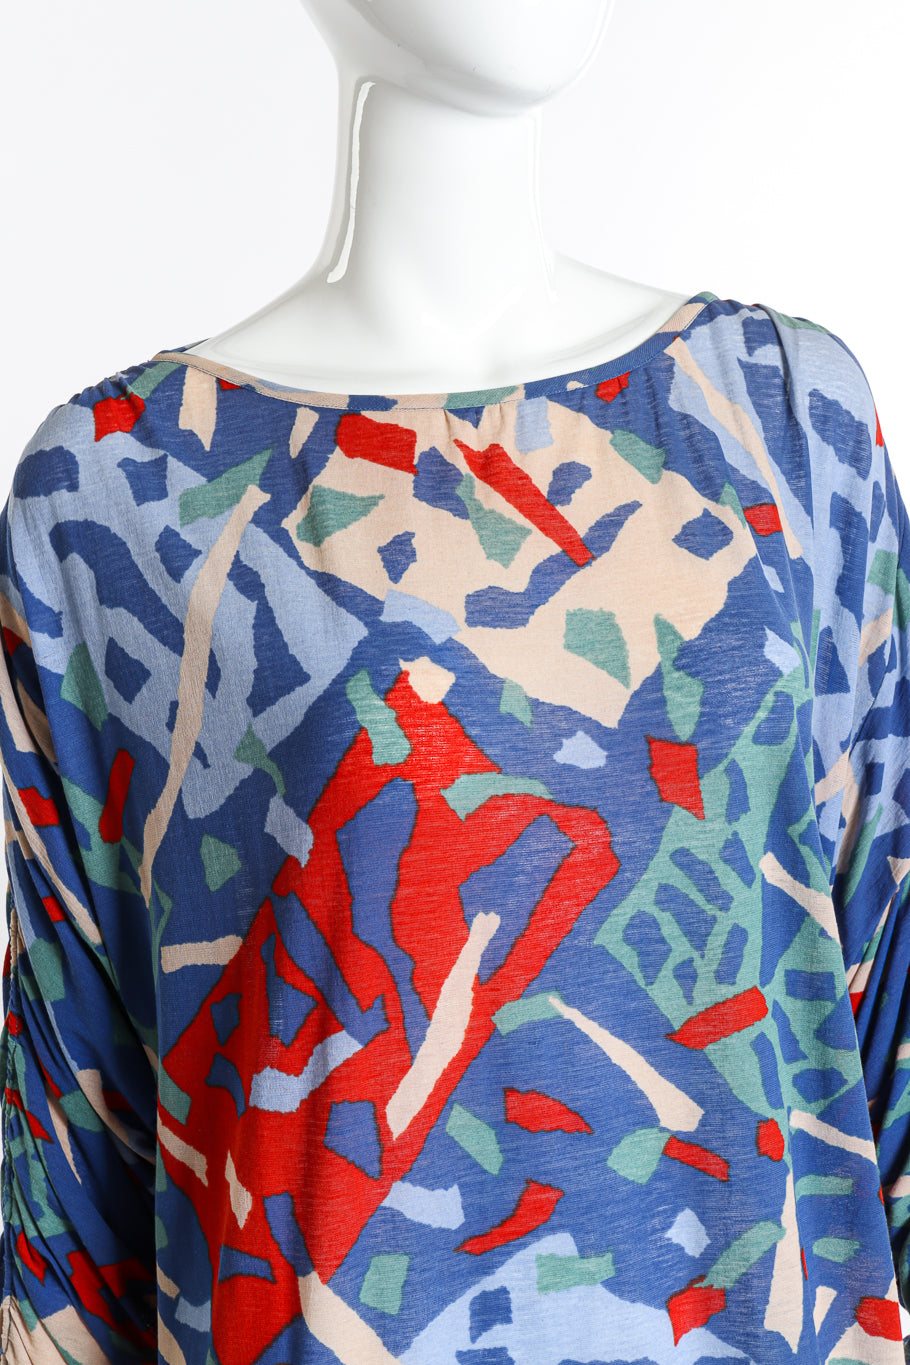 Vintage Missoni Abstract Print Dress front on mannequin closeup @recess la